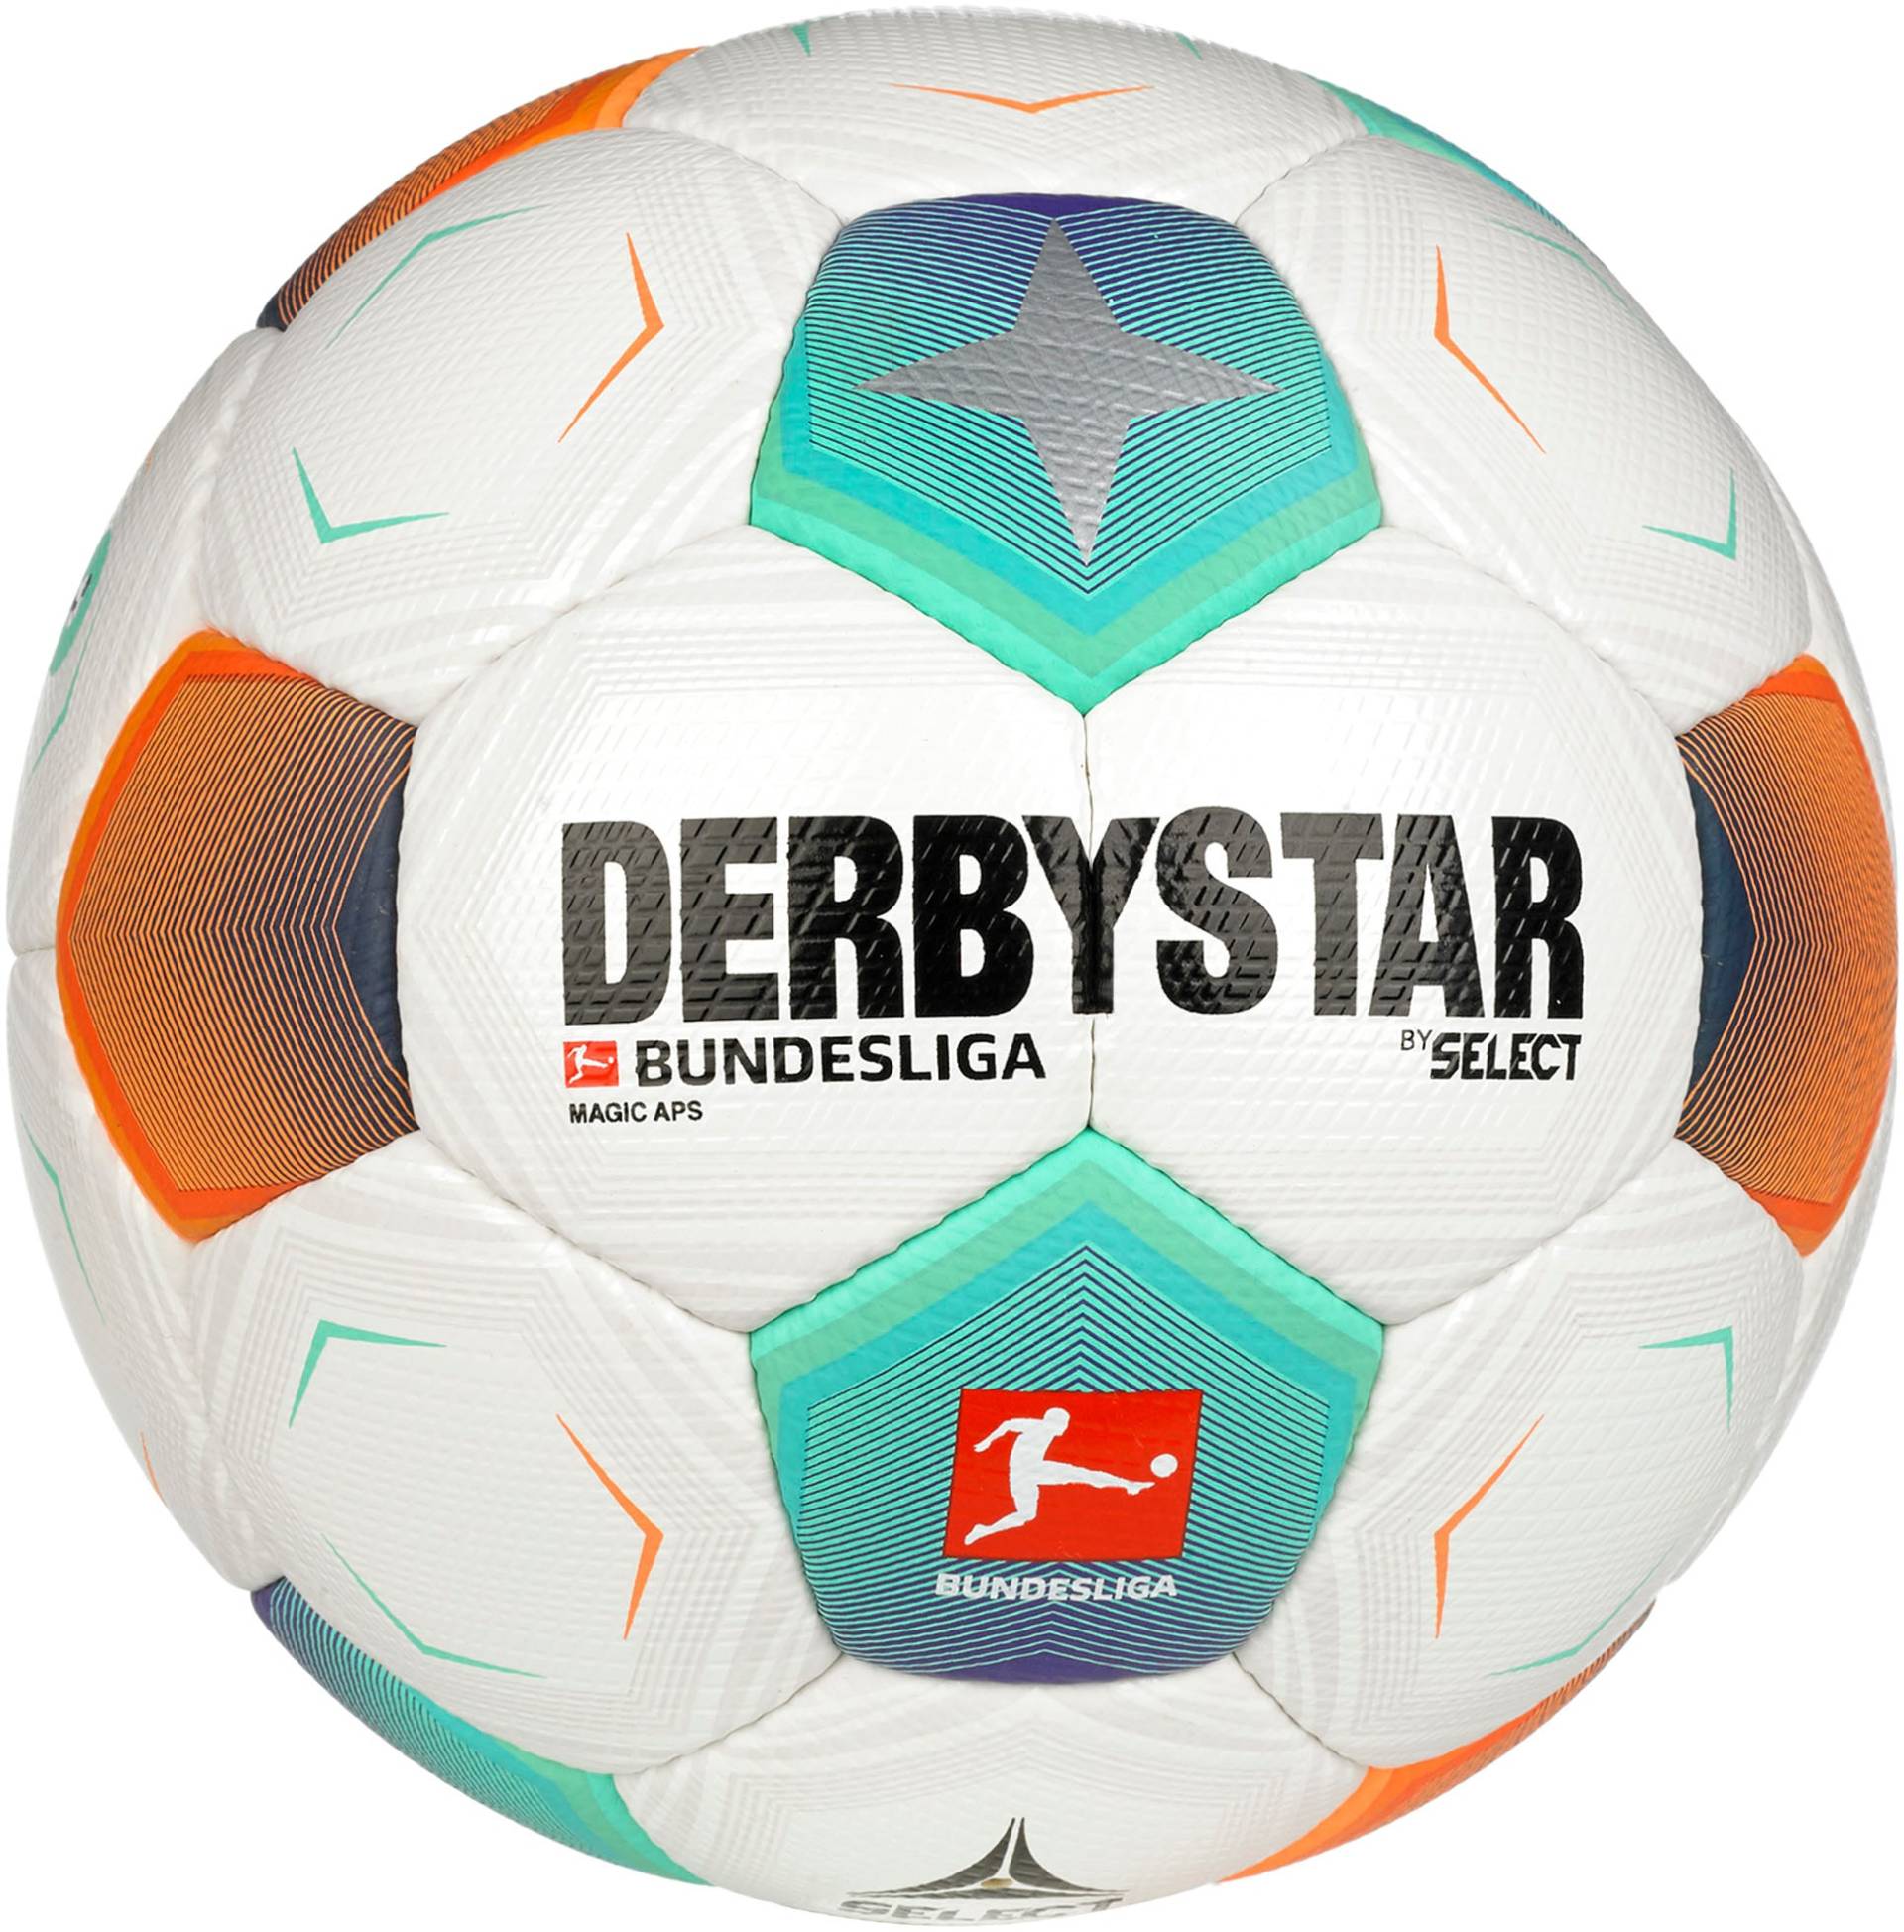 Derbystar Fussball »Bundesliga Magic APS« von Derbystar